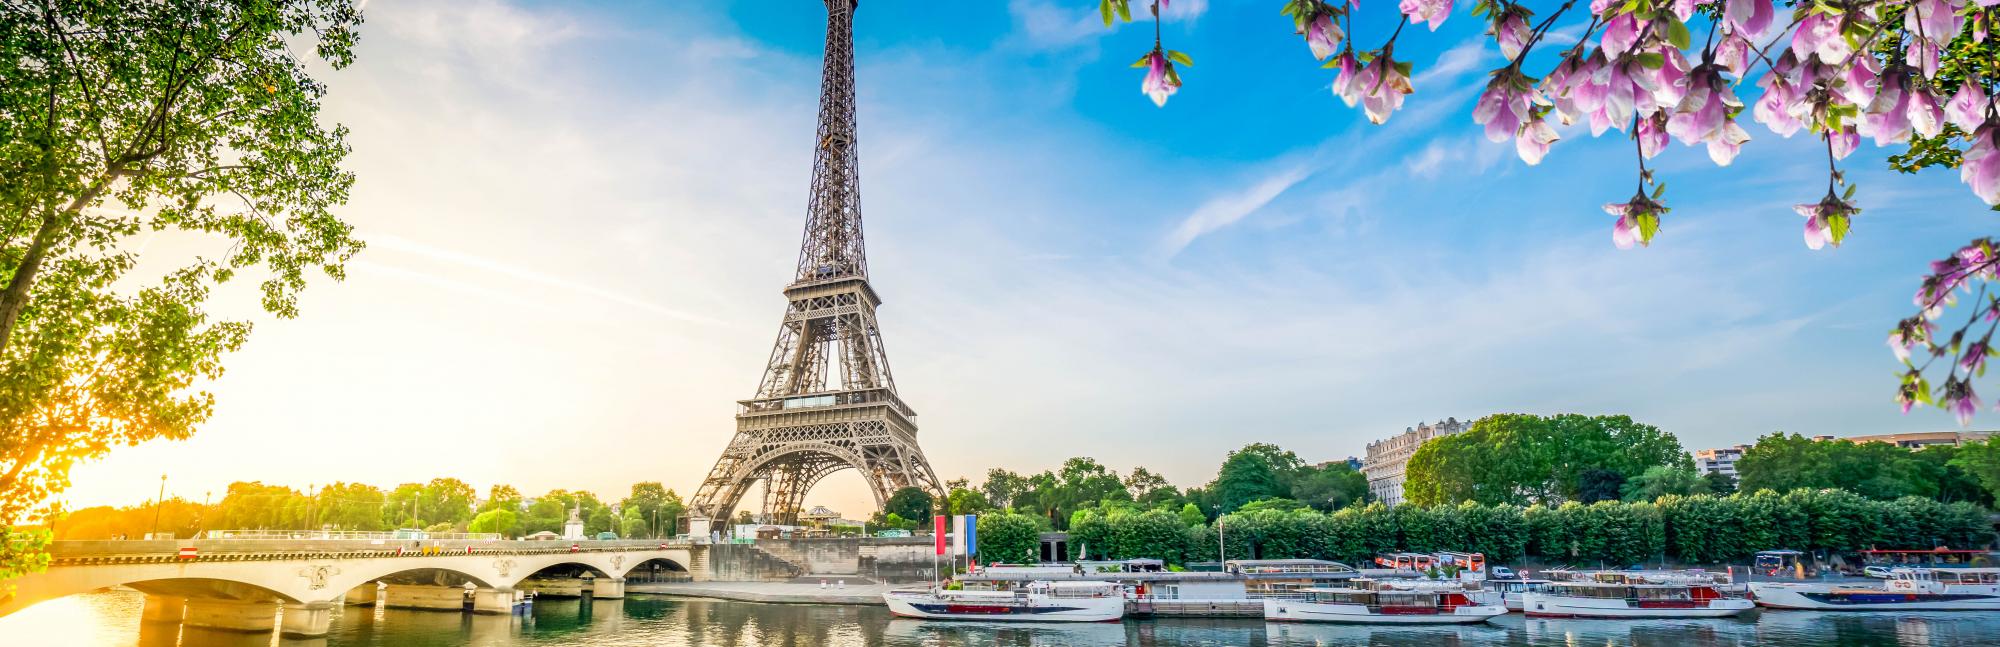 Paris view of Eiffel Tower